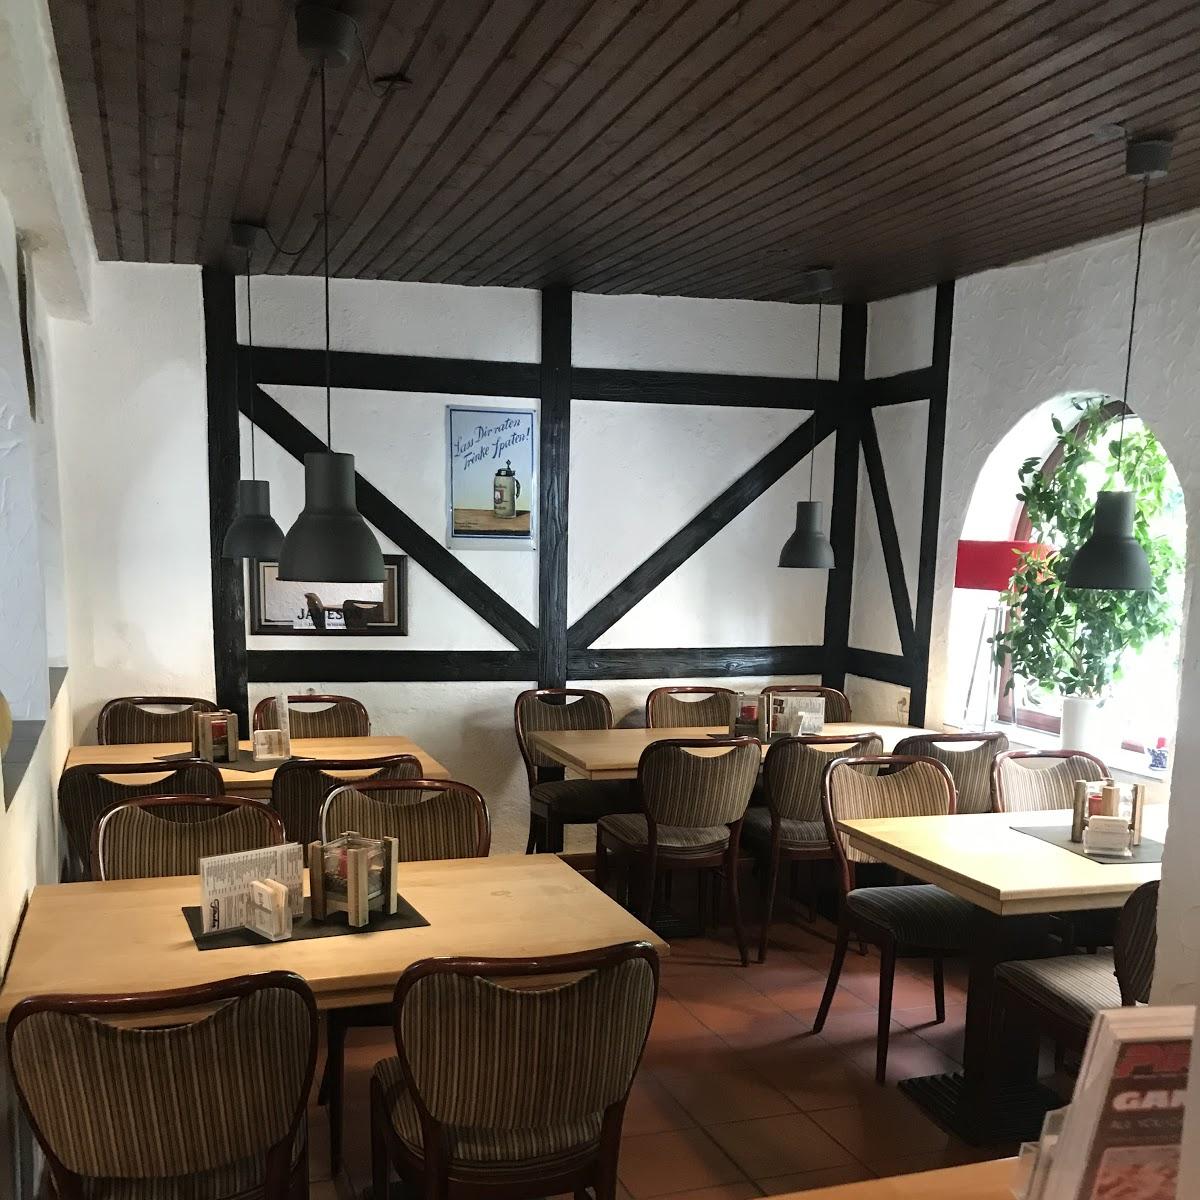 Restaurant "Flachse 2.0" in Wegberg